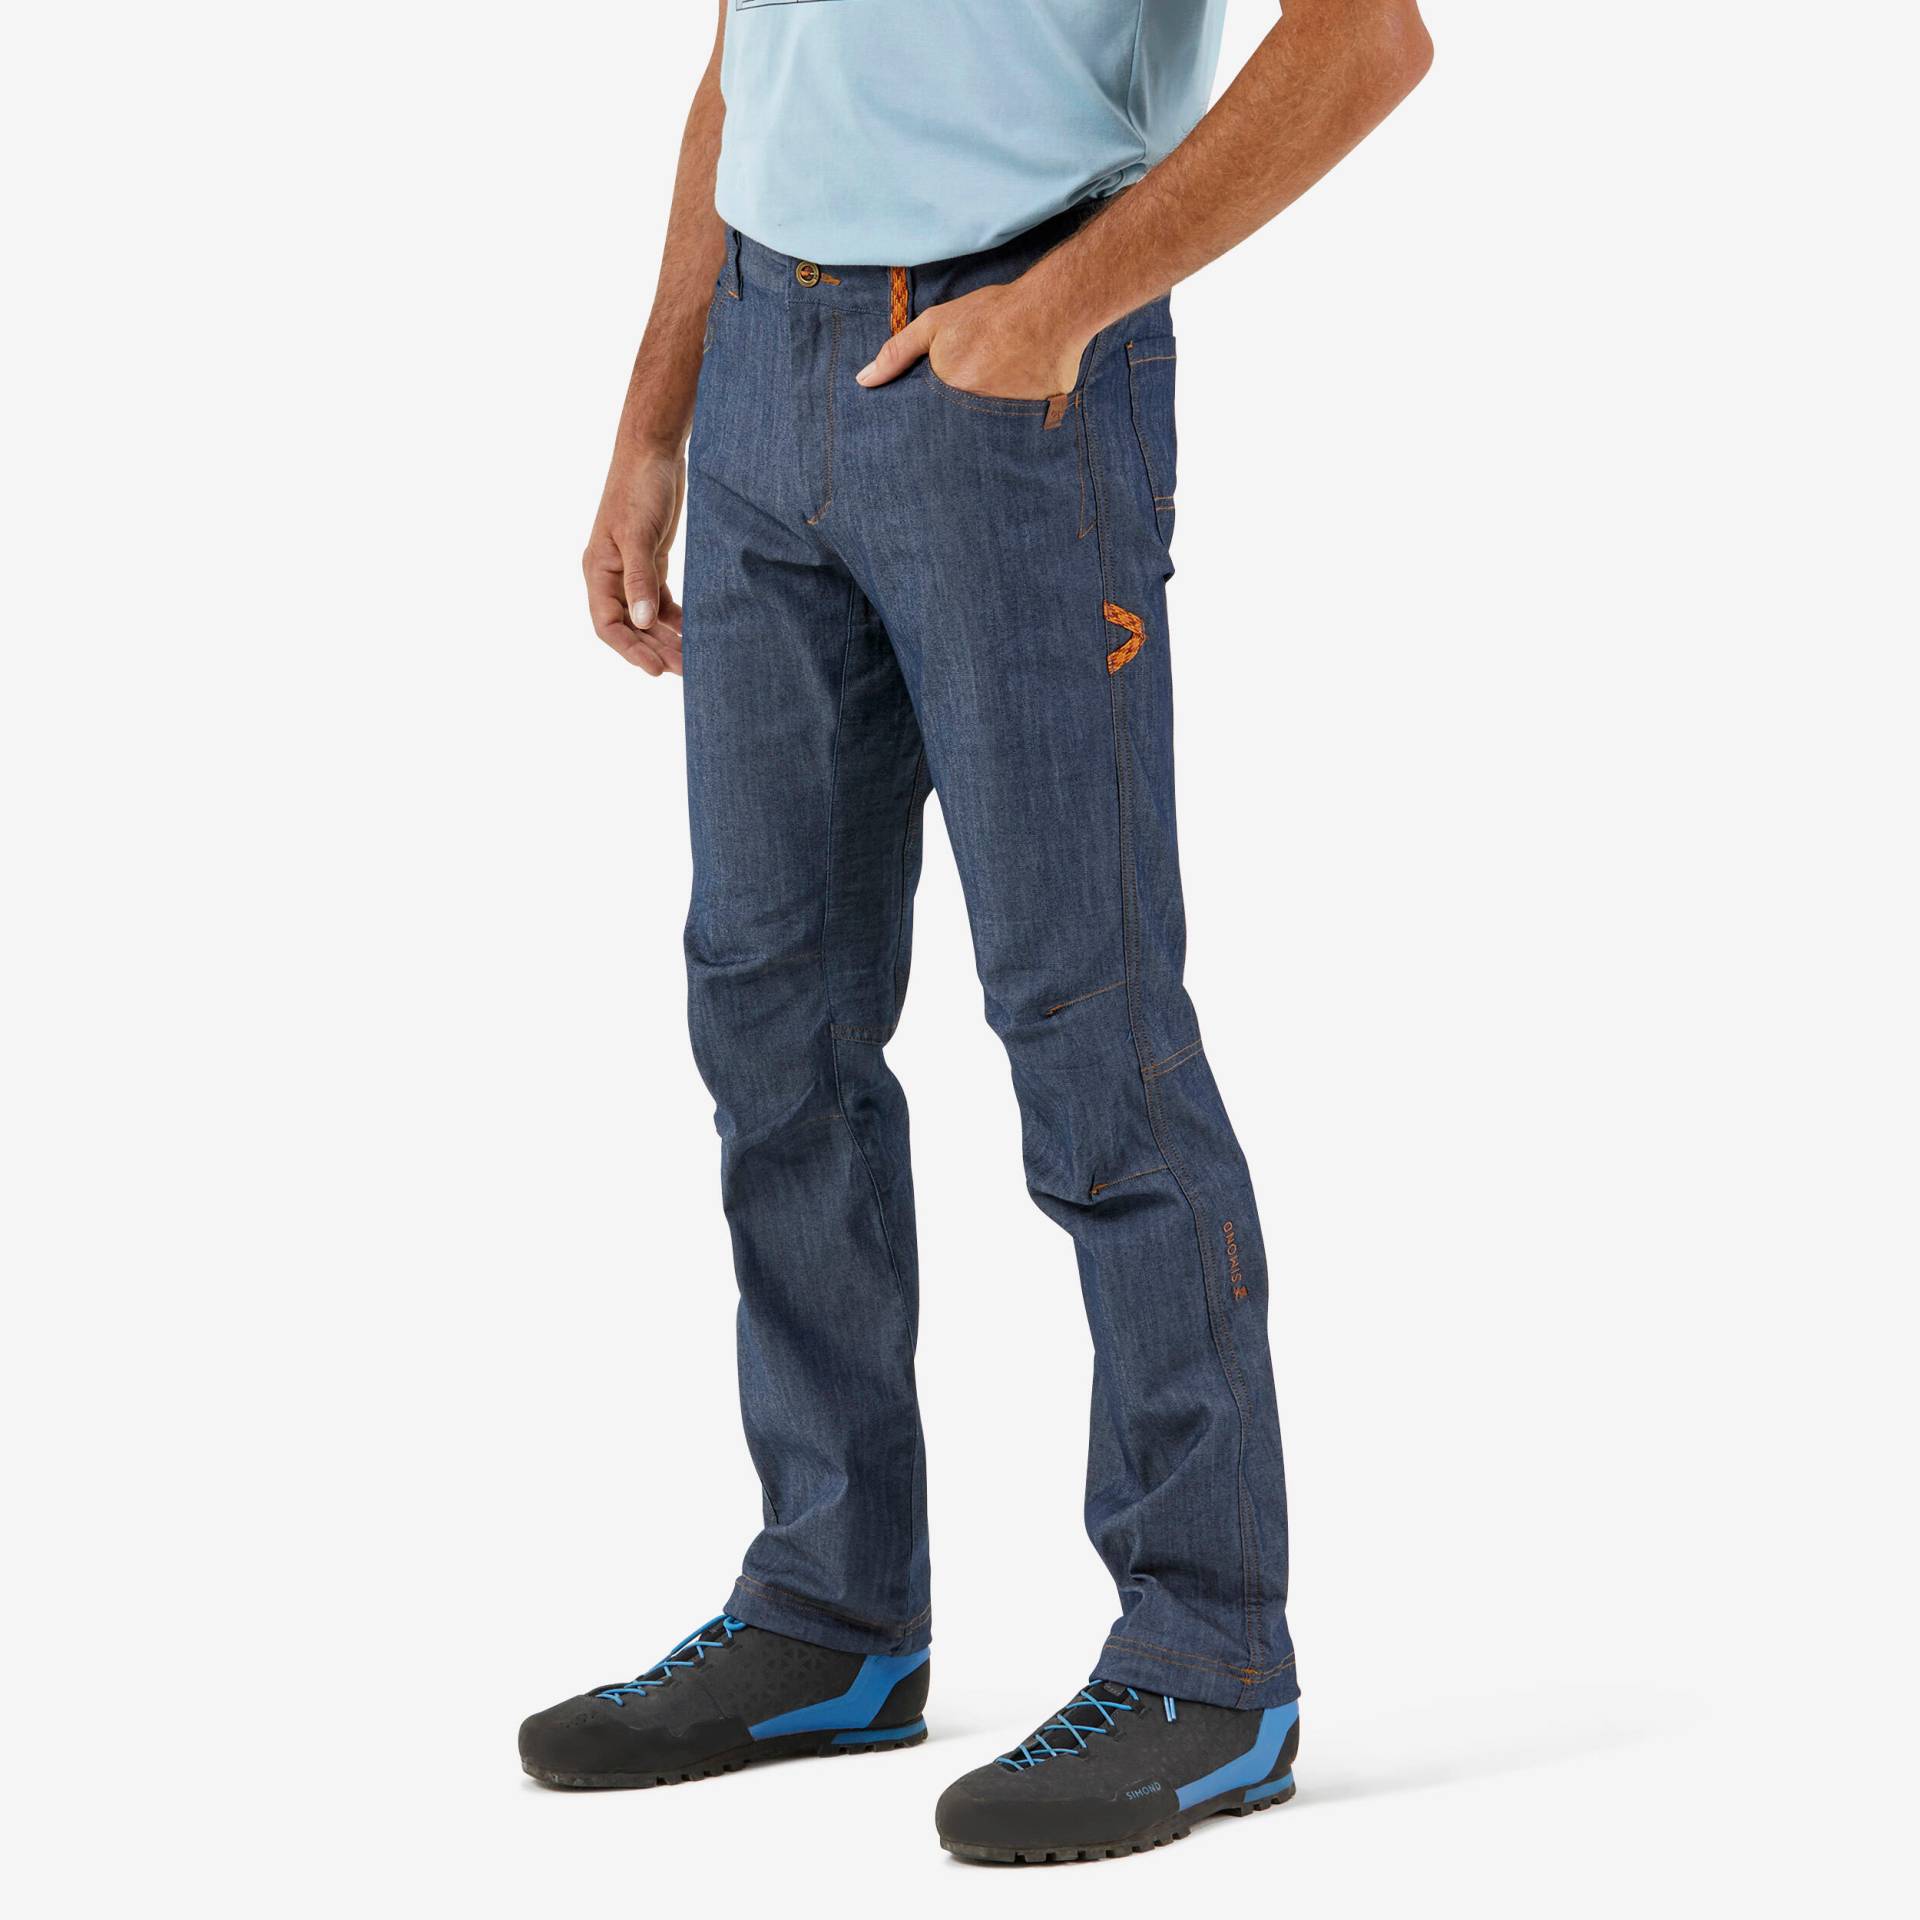 Kletterhose Herren Jeans Stretch - Vertika V2 von SIMOND